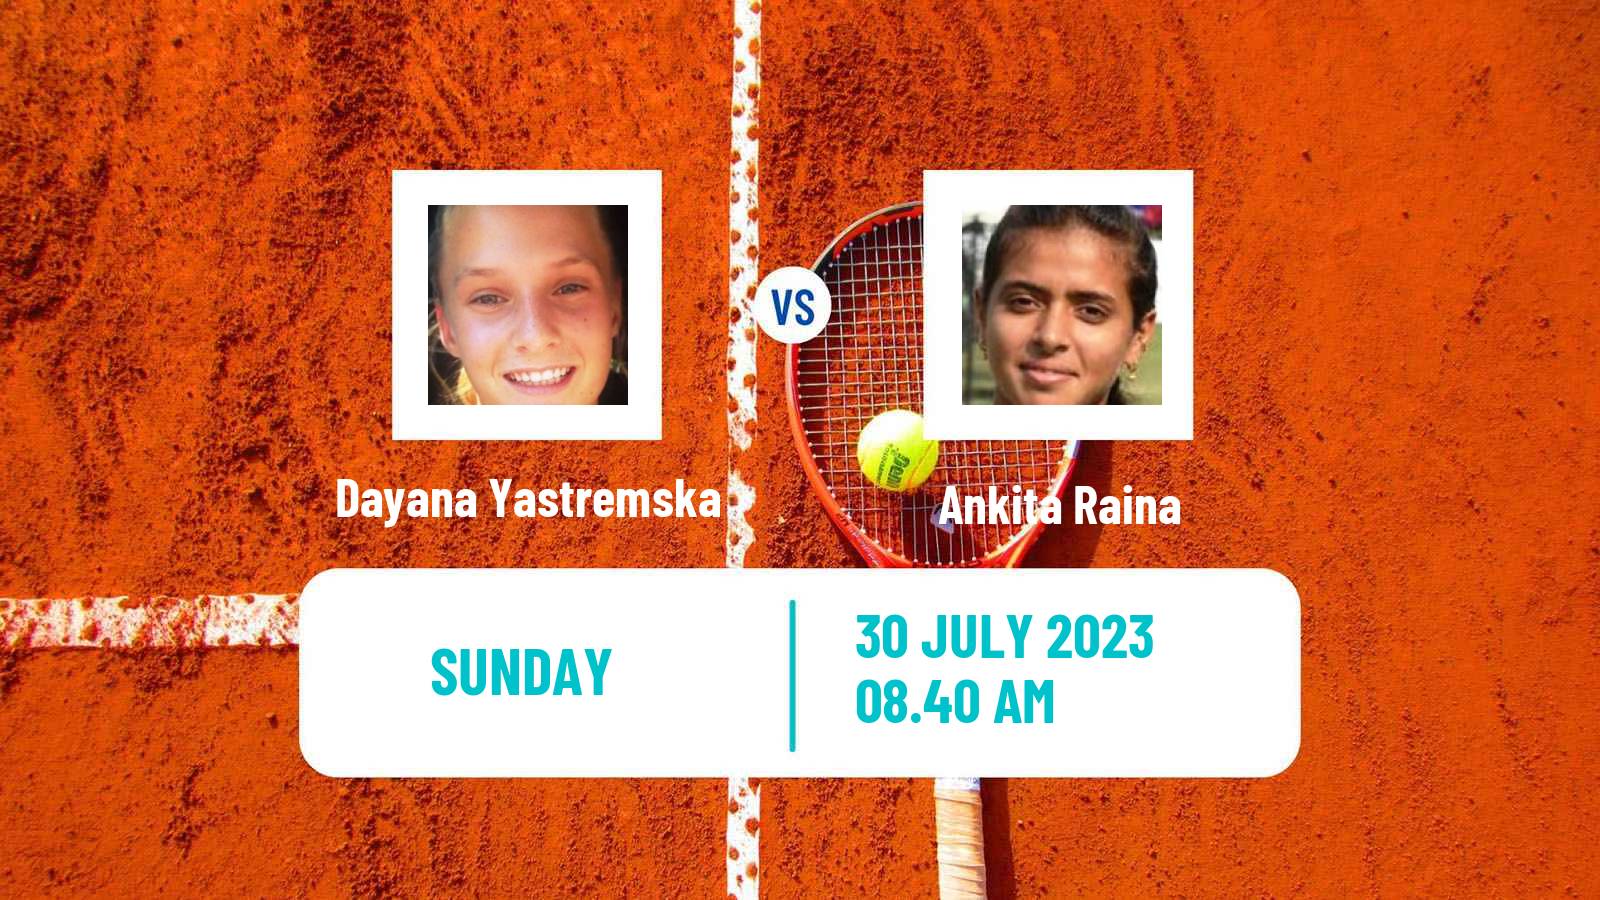 Tennis WTA Prague Dayana Yastremska - Ankita Raina